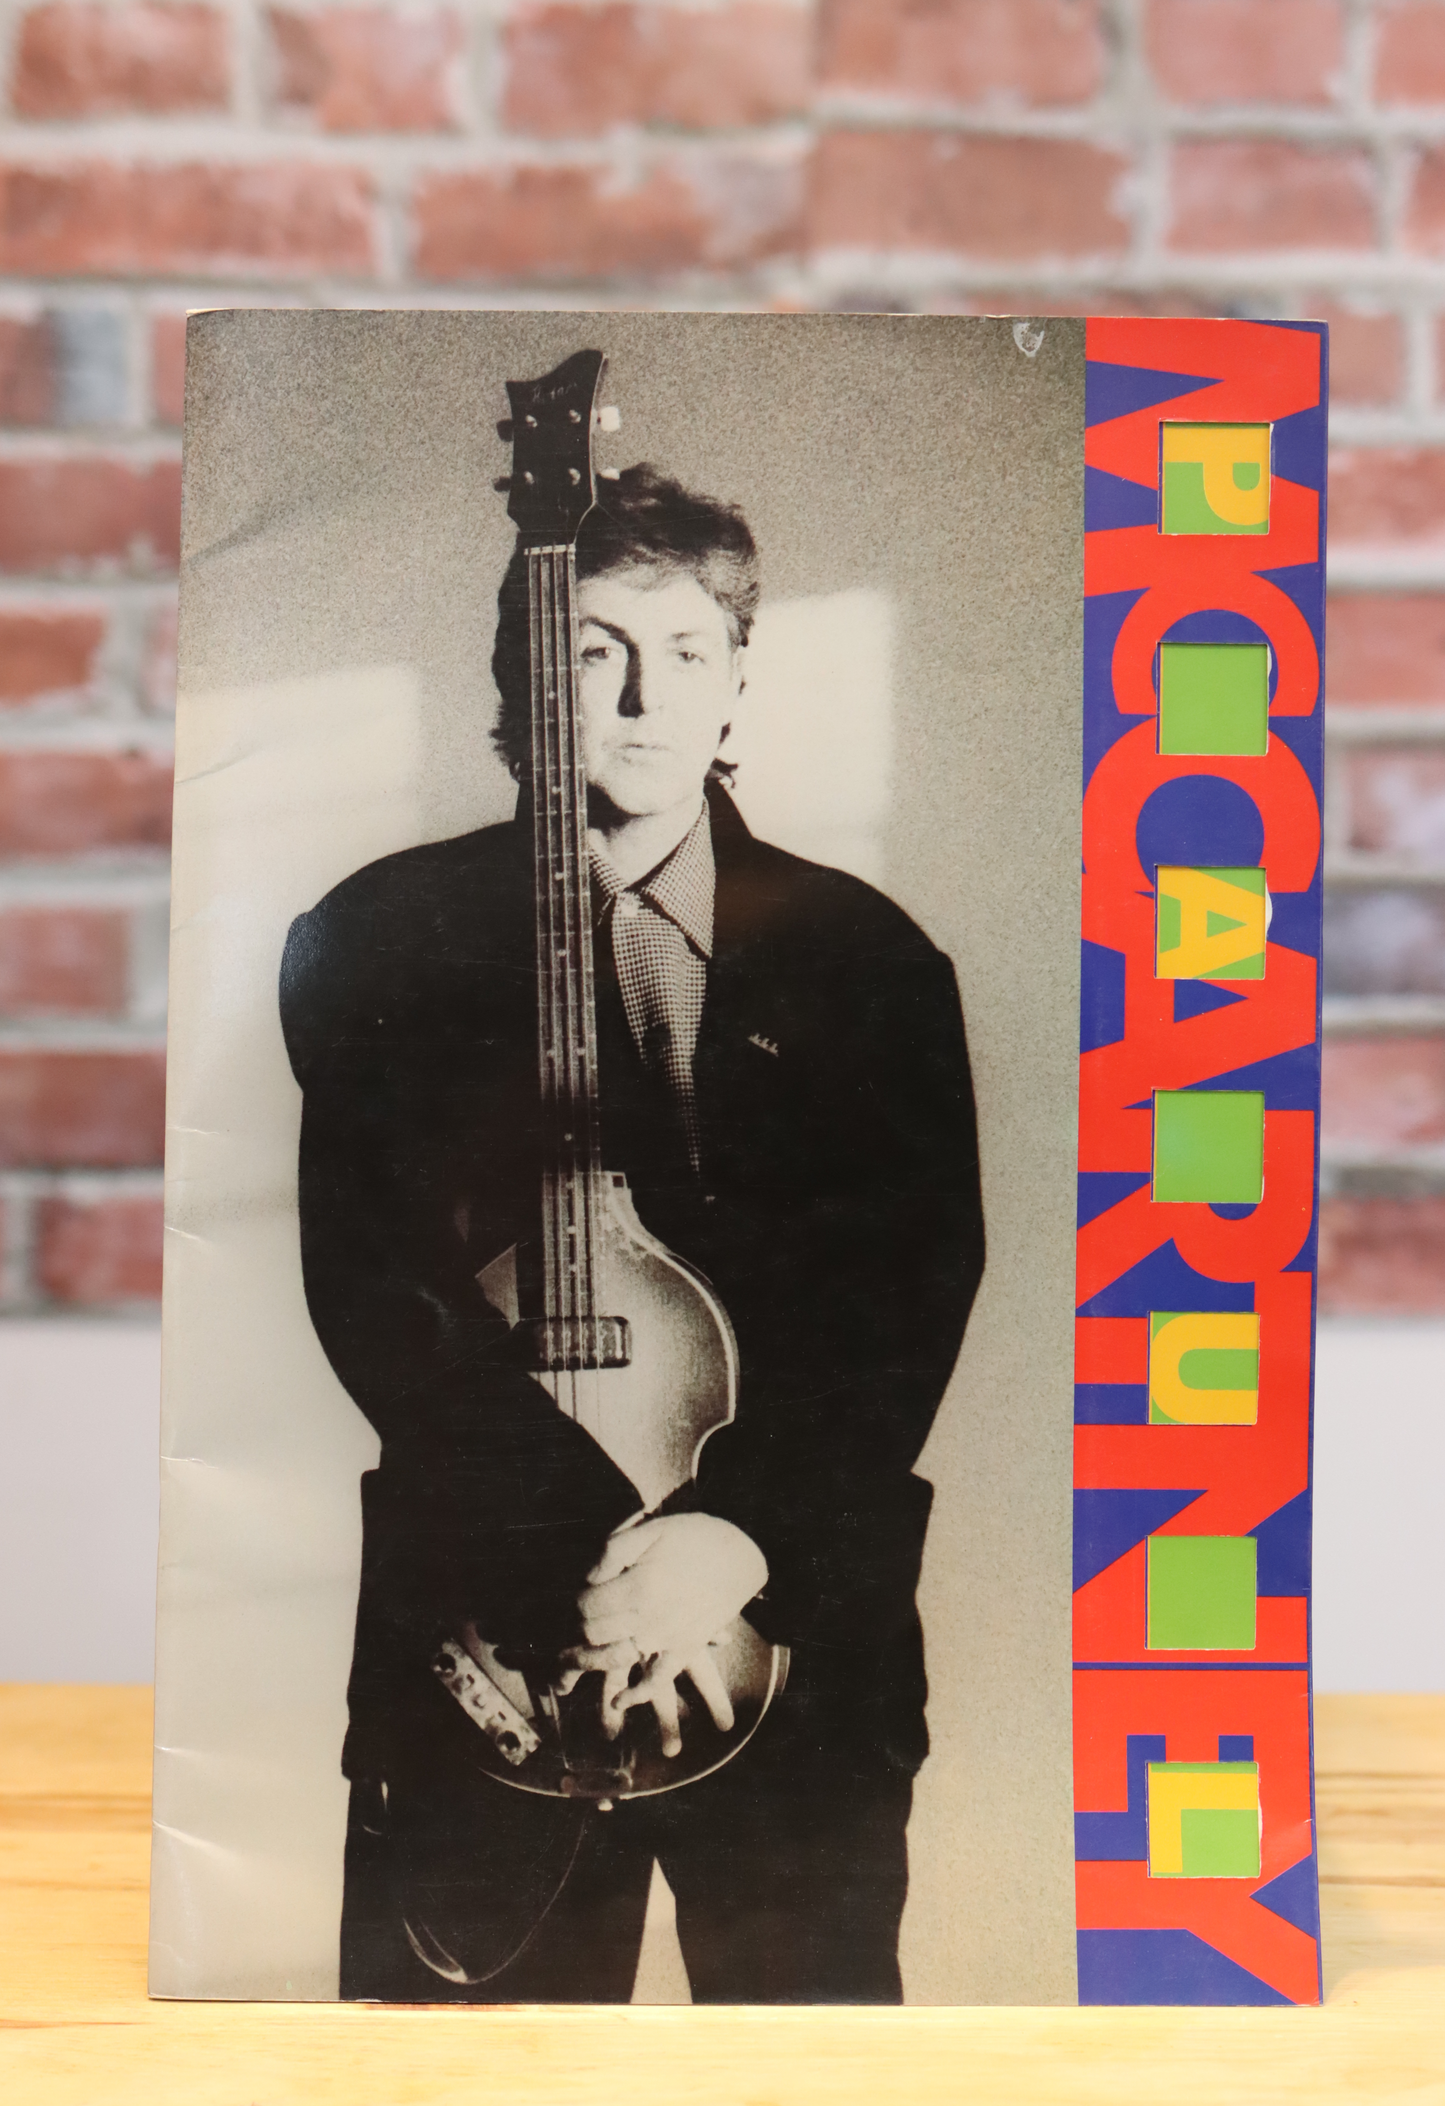 1989 Paul McCartney Original Vintage Concert Program